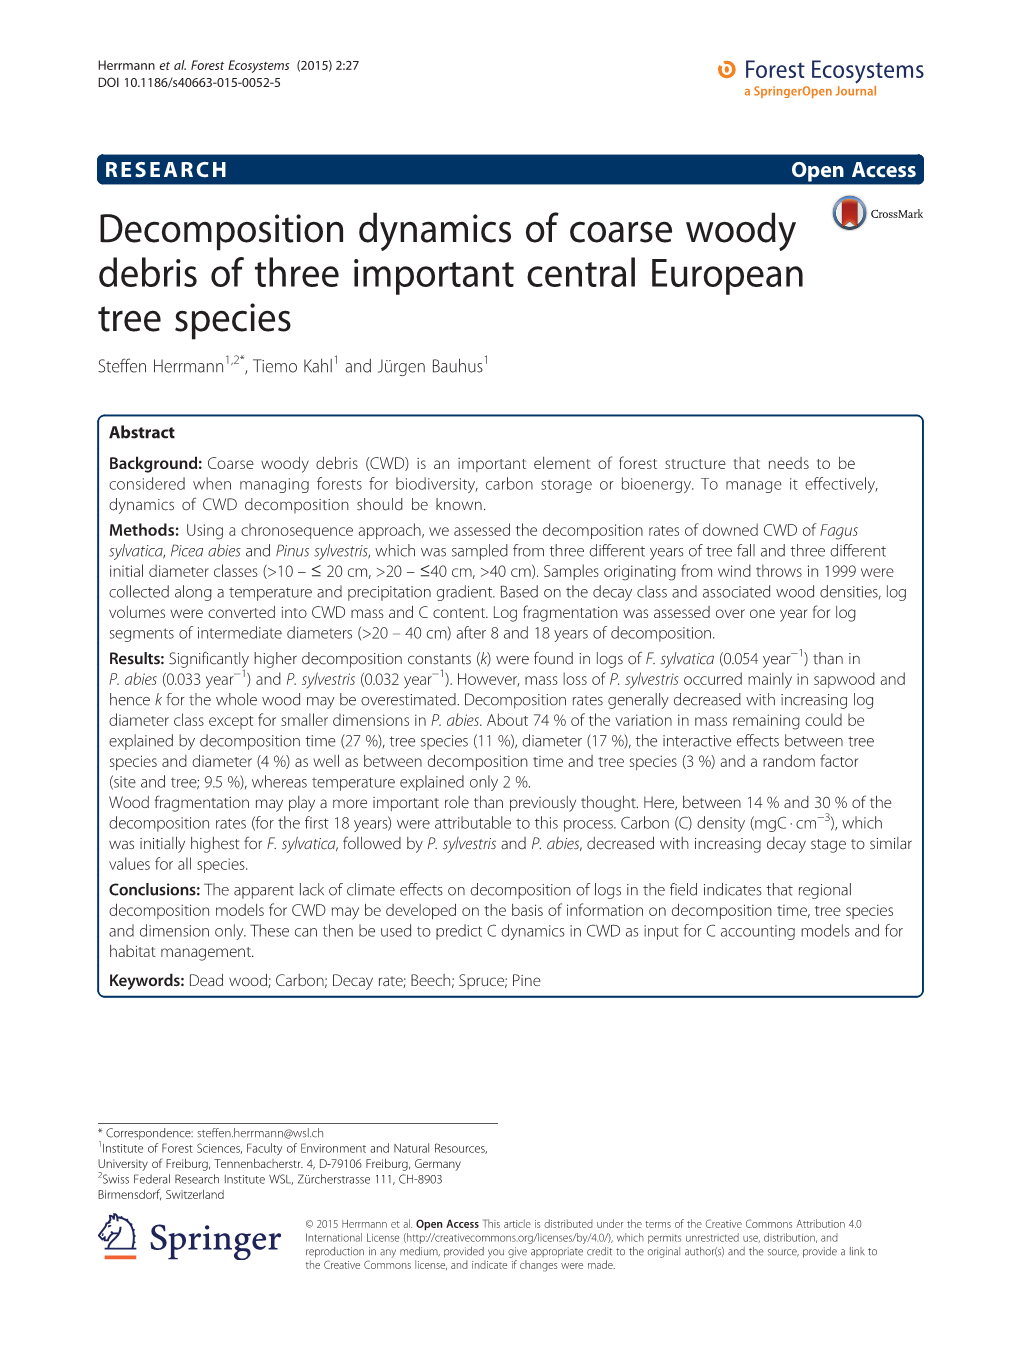 Decomposition Dynamics of Coarse Woody Debris of Three Important Central European Tree Species Steffen Herrmann1,2*, Tiemo Kahl1 and Jürgen Bauhus1